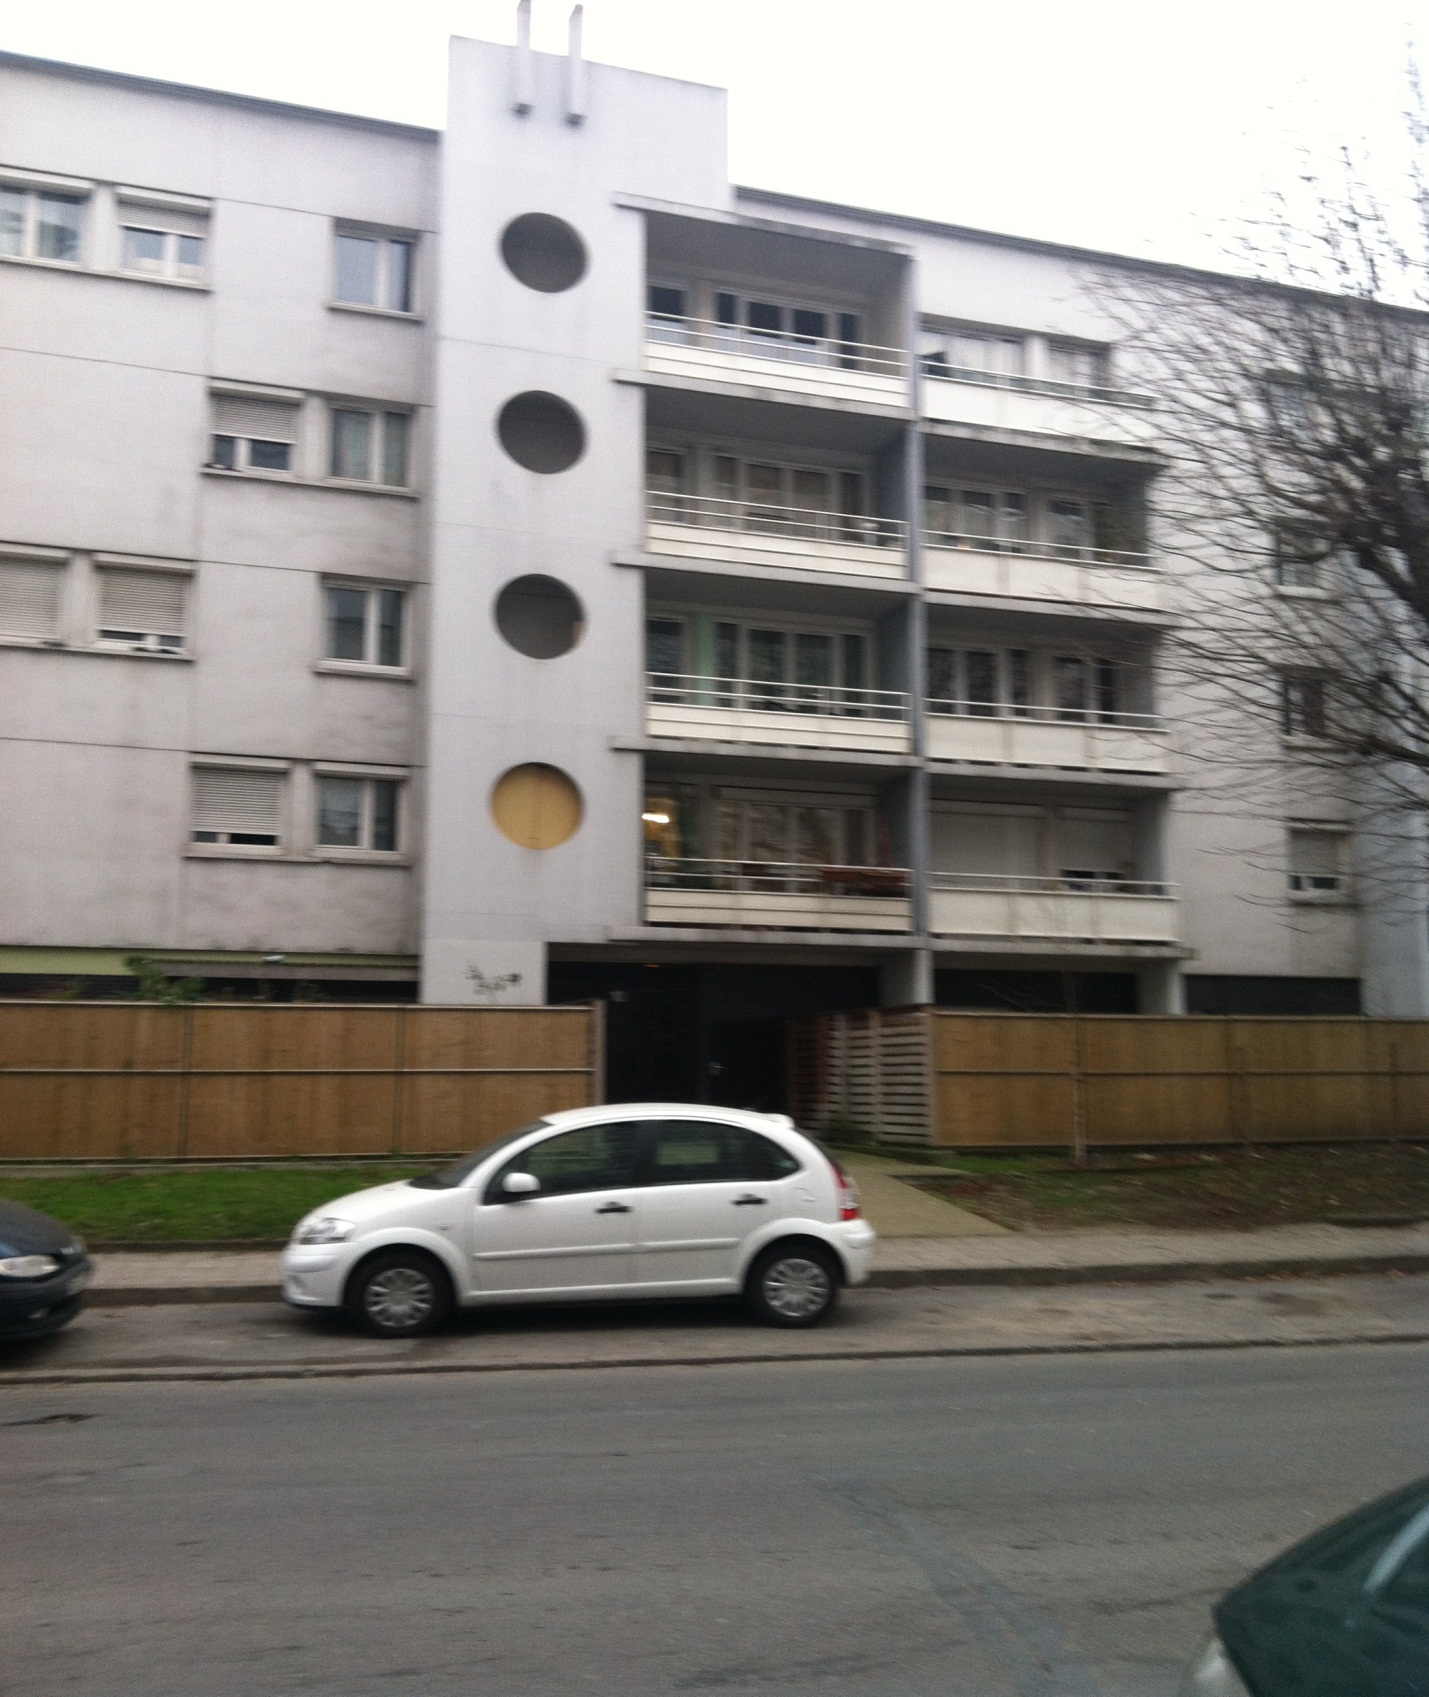 Paris Social Housing